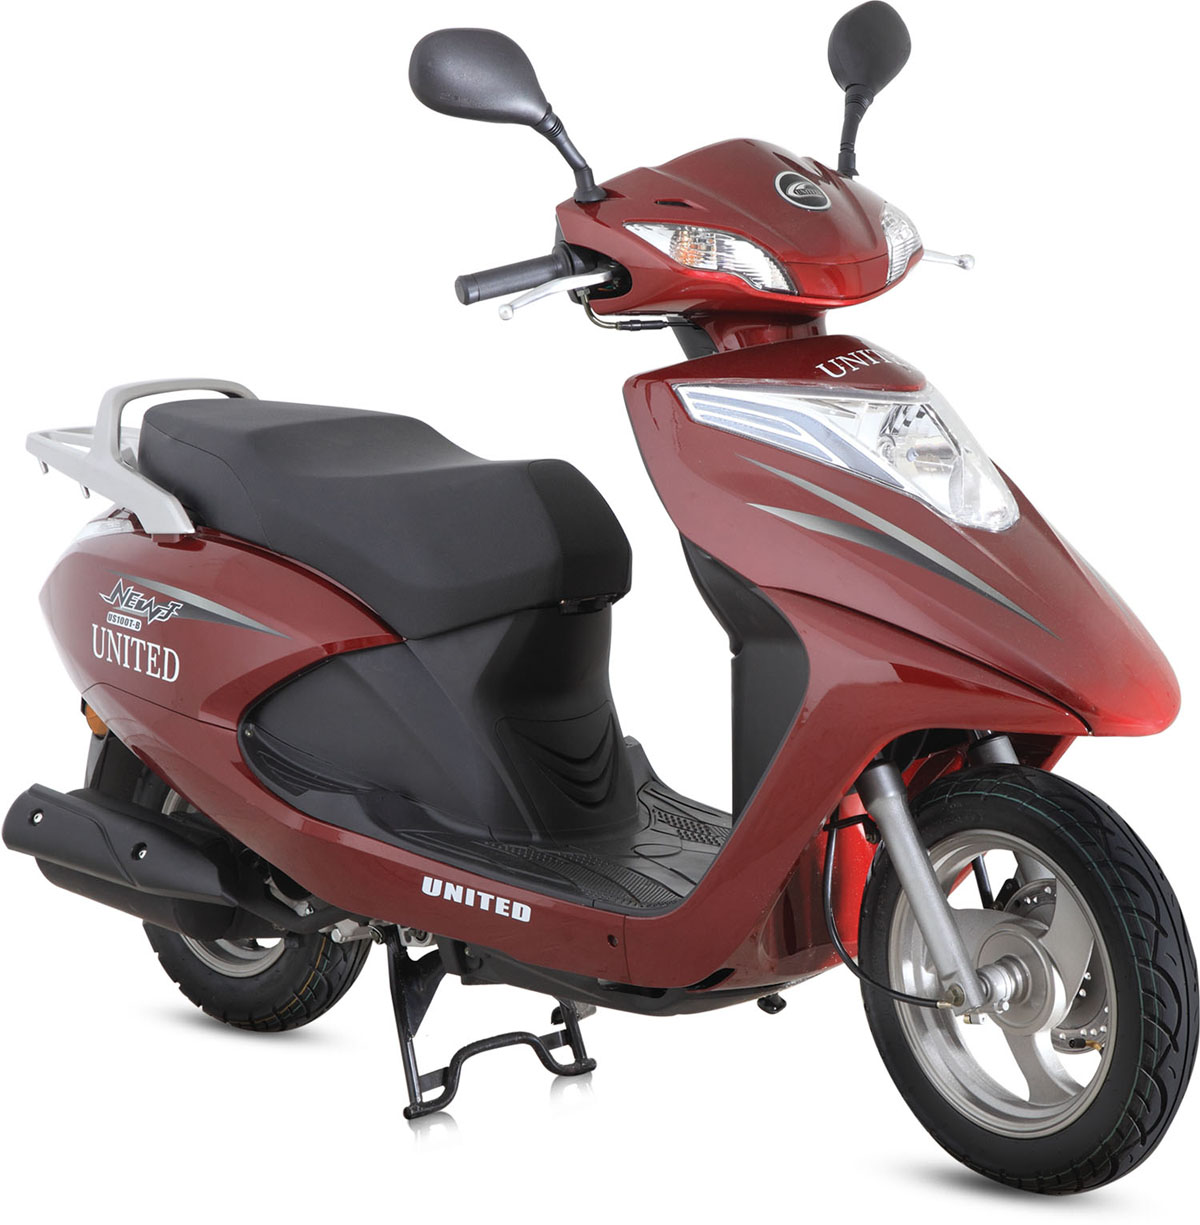 United Scooty 50cc Price in Pakistan 2021